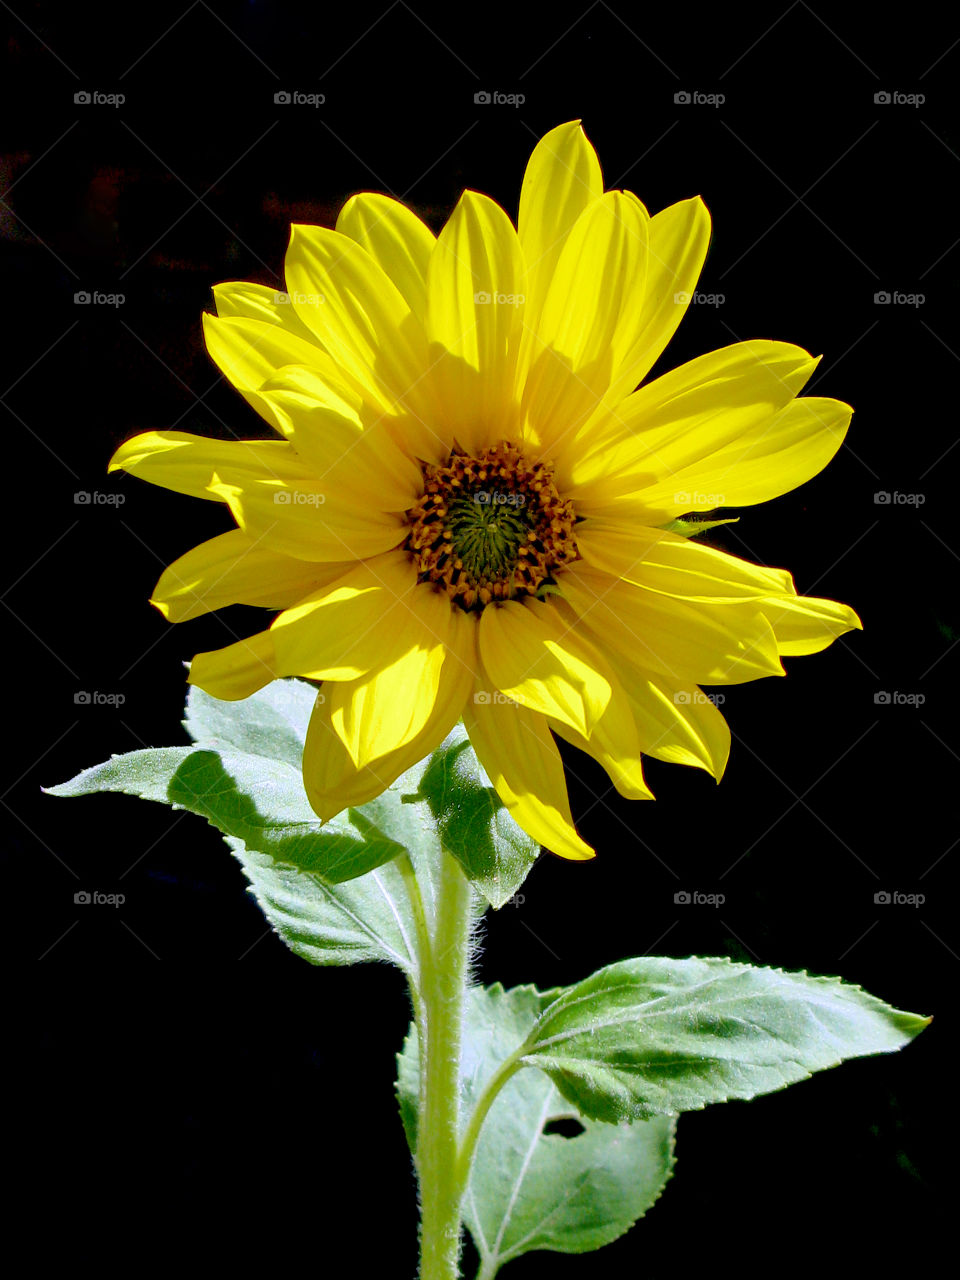 Sunflower on Black Background